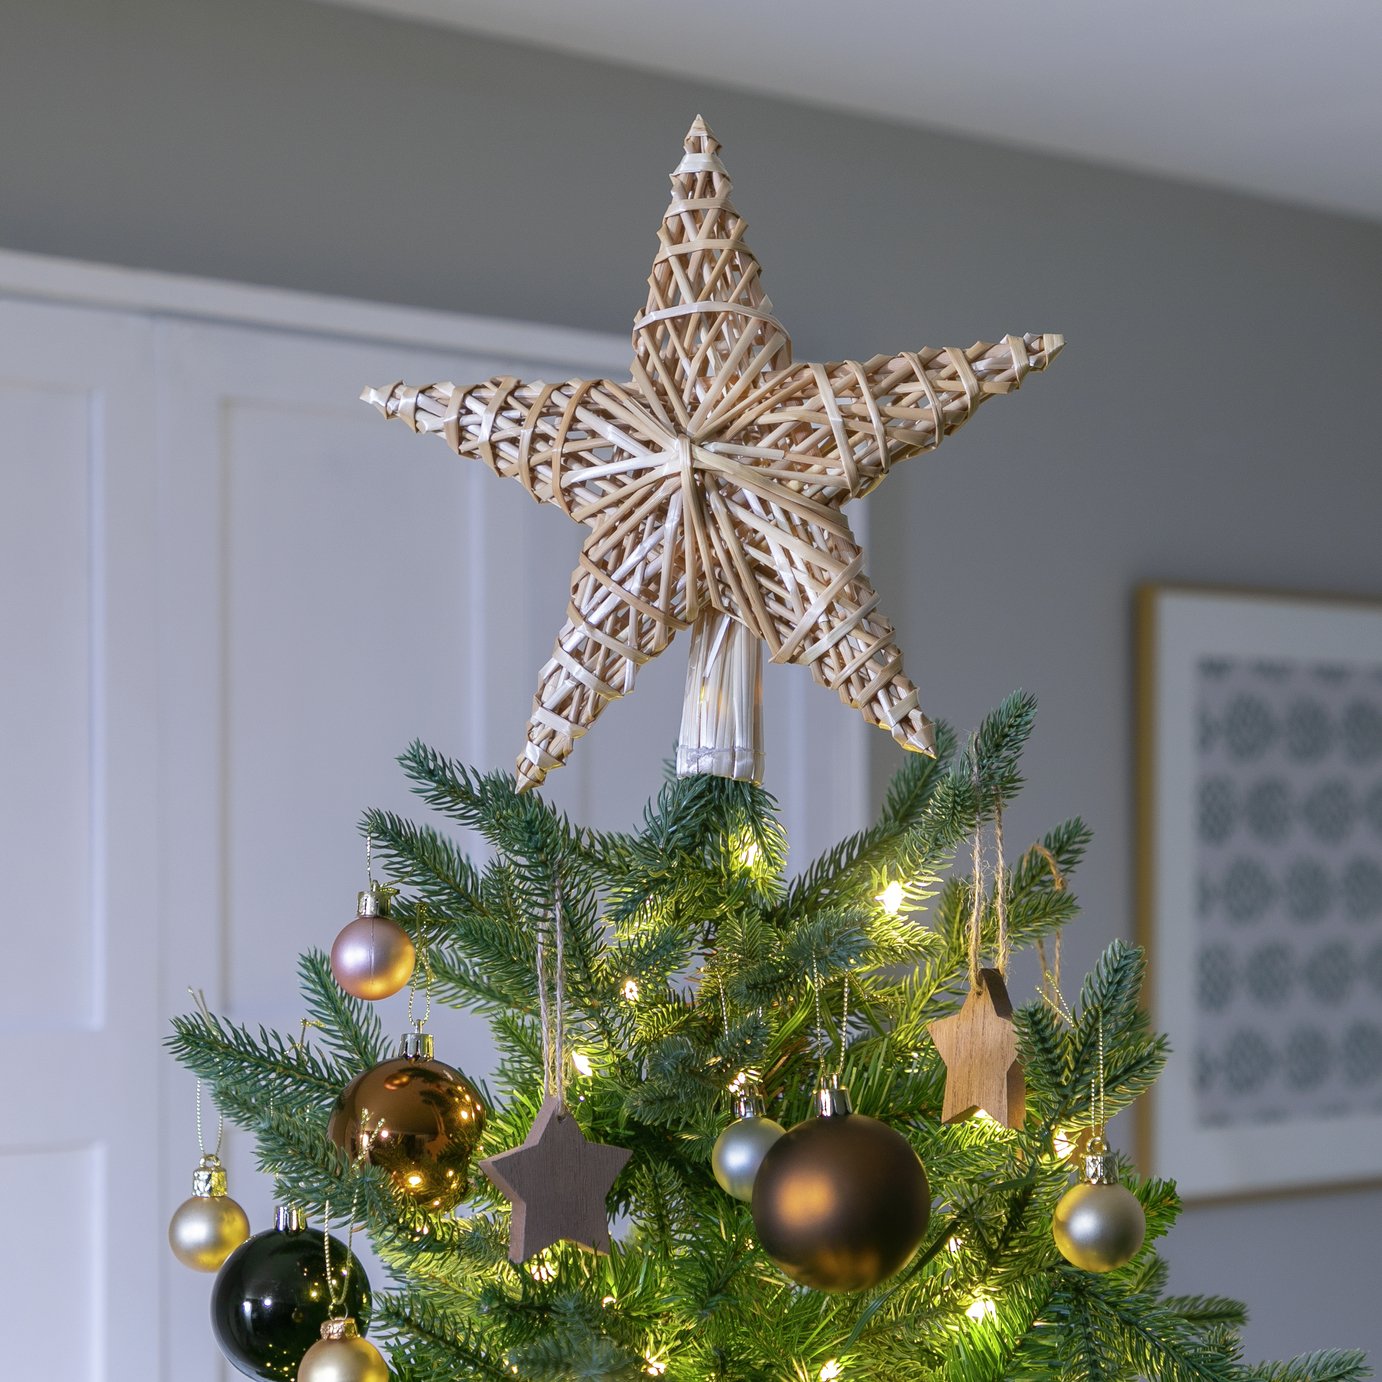 Habitat Wicker Star Shaped Christmas Tree Topper - Natural